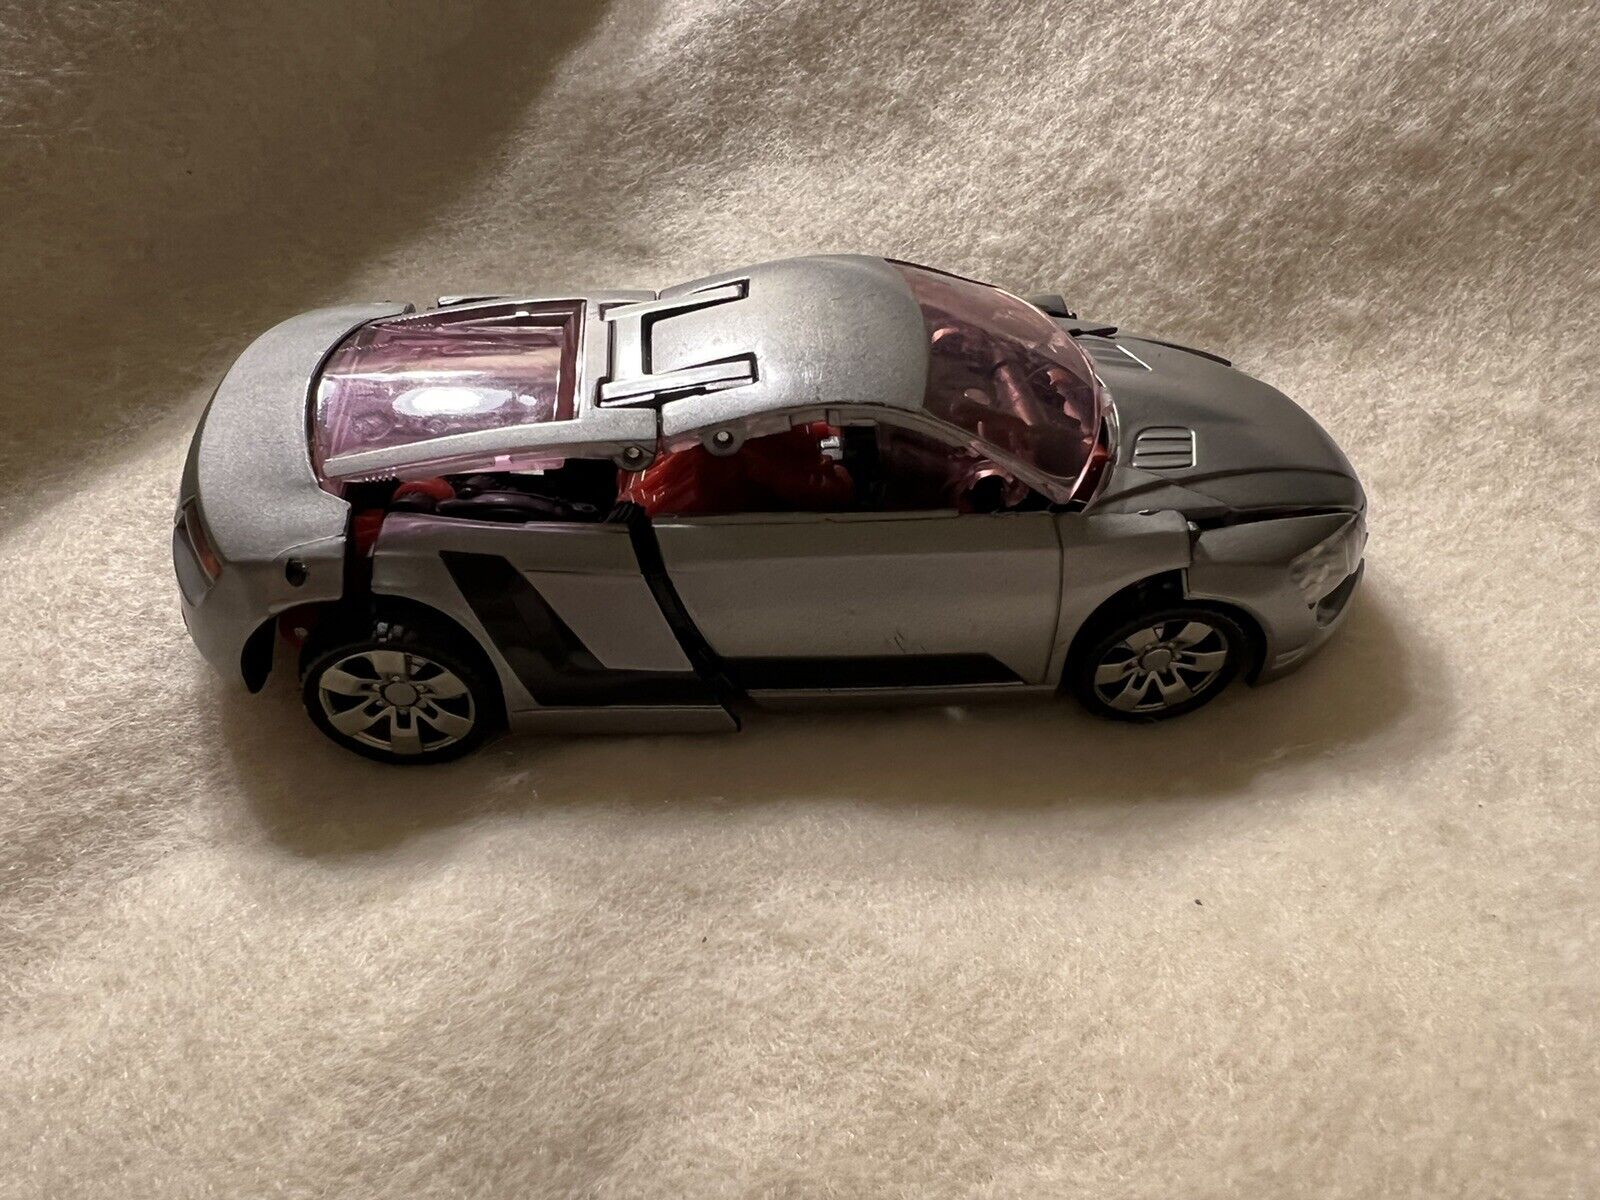 Transformers Revenge of the Fallen Sideways Audi Action Figure Car